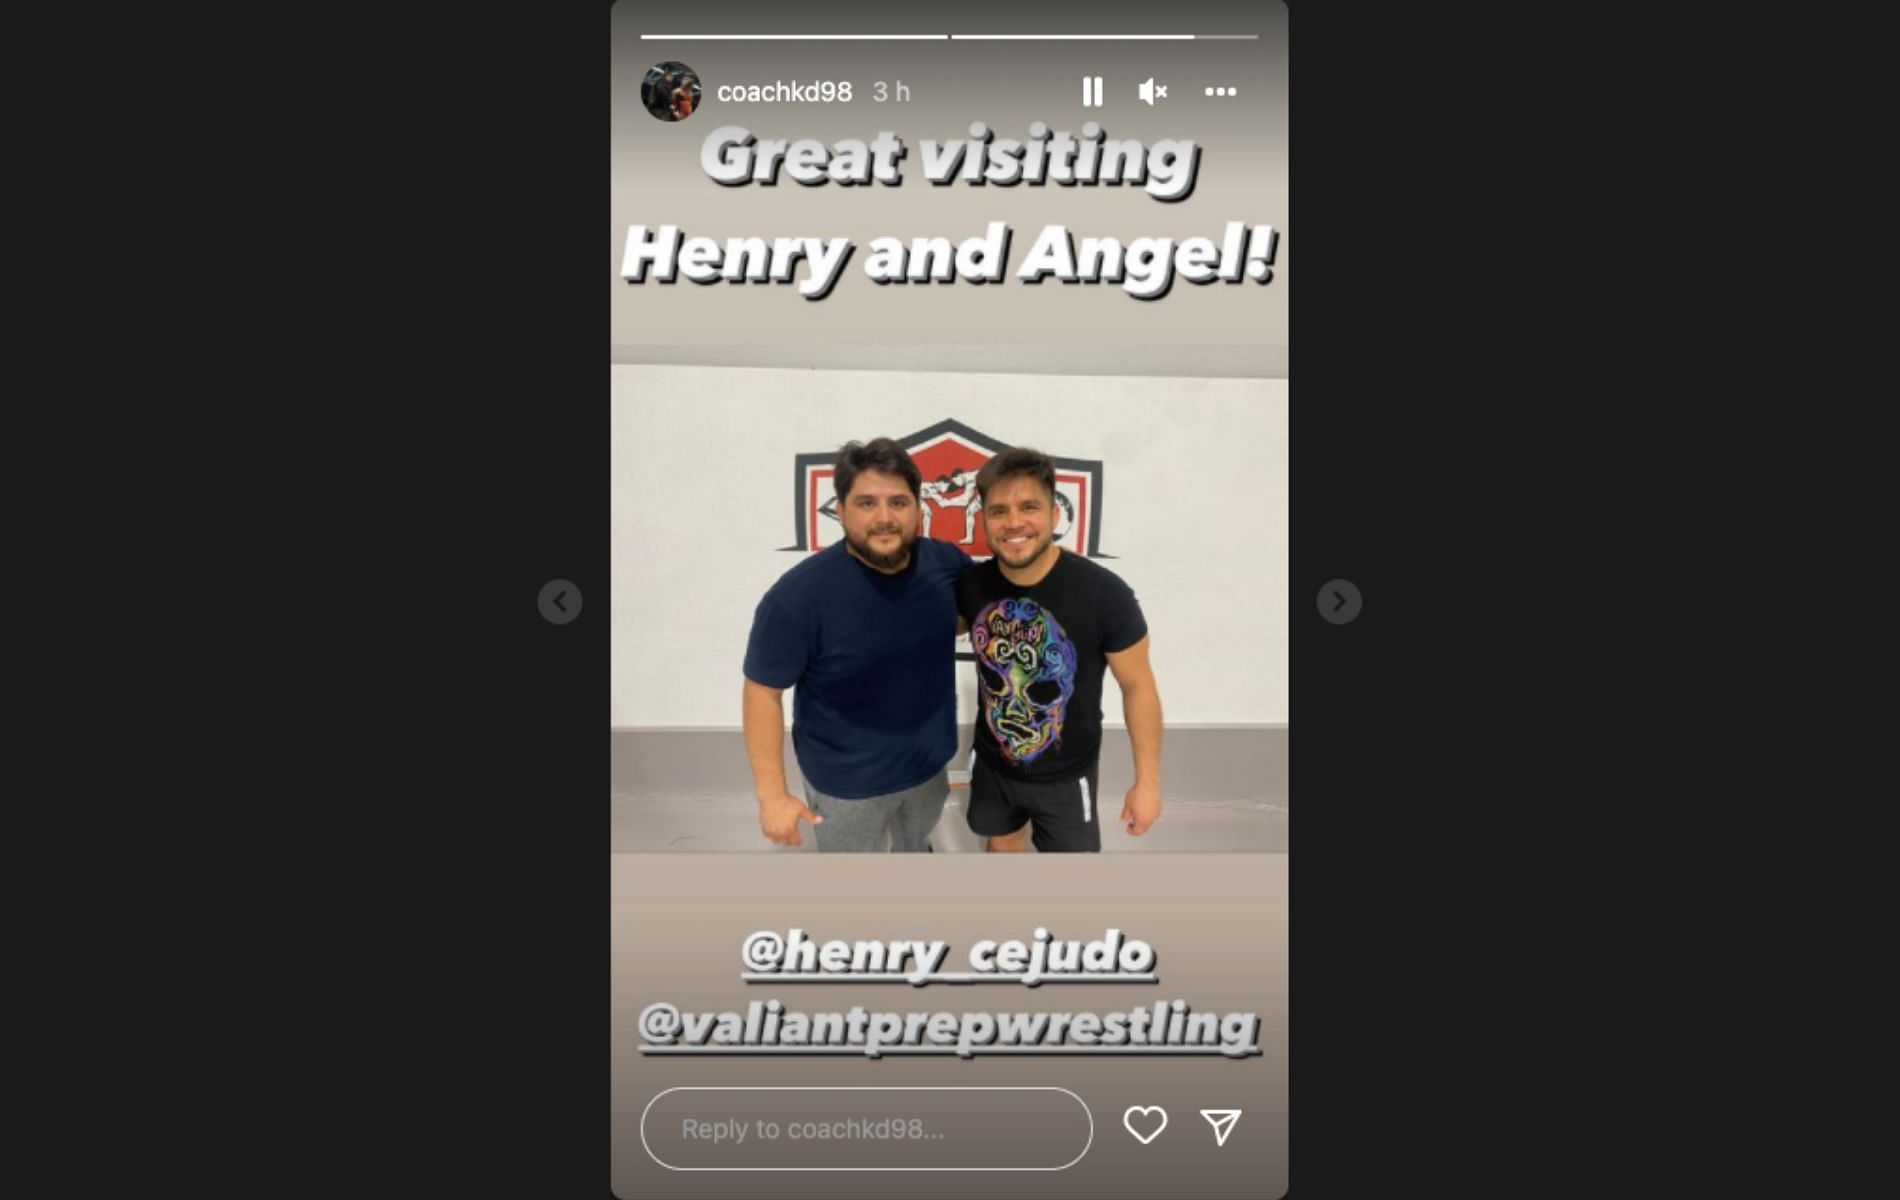 Angel Cejudo (left) &amp; Henry Cejudo (right) [Image Credits- @coachkd98 on Instagram]